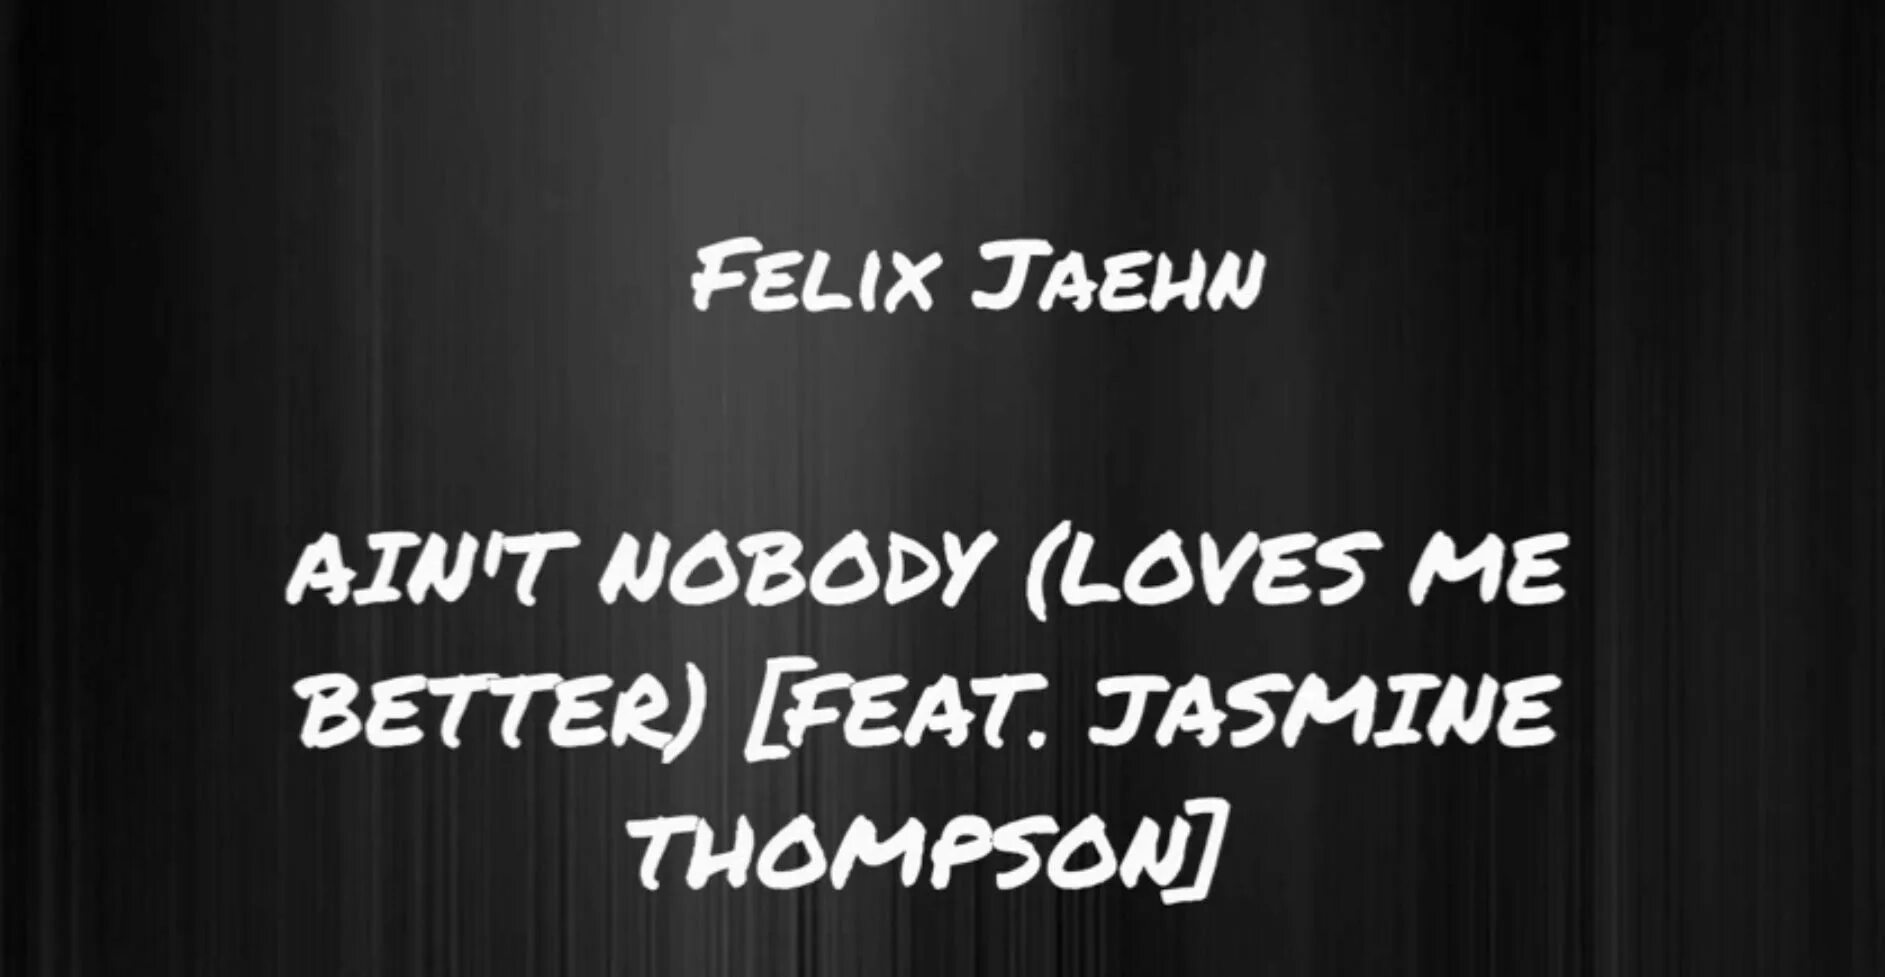 Felix Jaehn Jasmine Thompson Ain't Nobody. Felix Jaehn Ain't Nobody. Ain't Nobody Loves me better Felix Jaehn feat. Jasmine Thompson. Ain't Nobody Loves me better. I can do better love